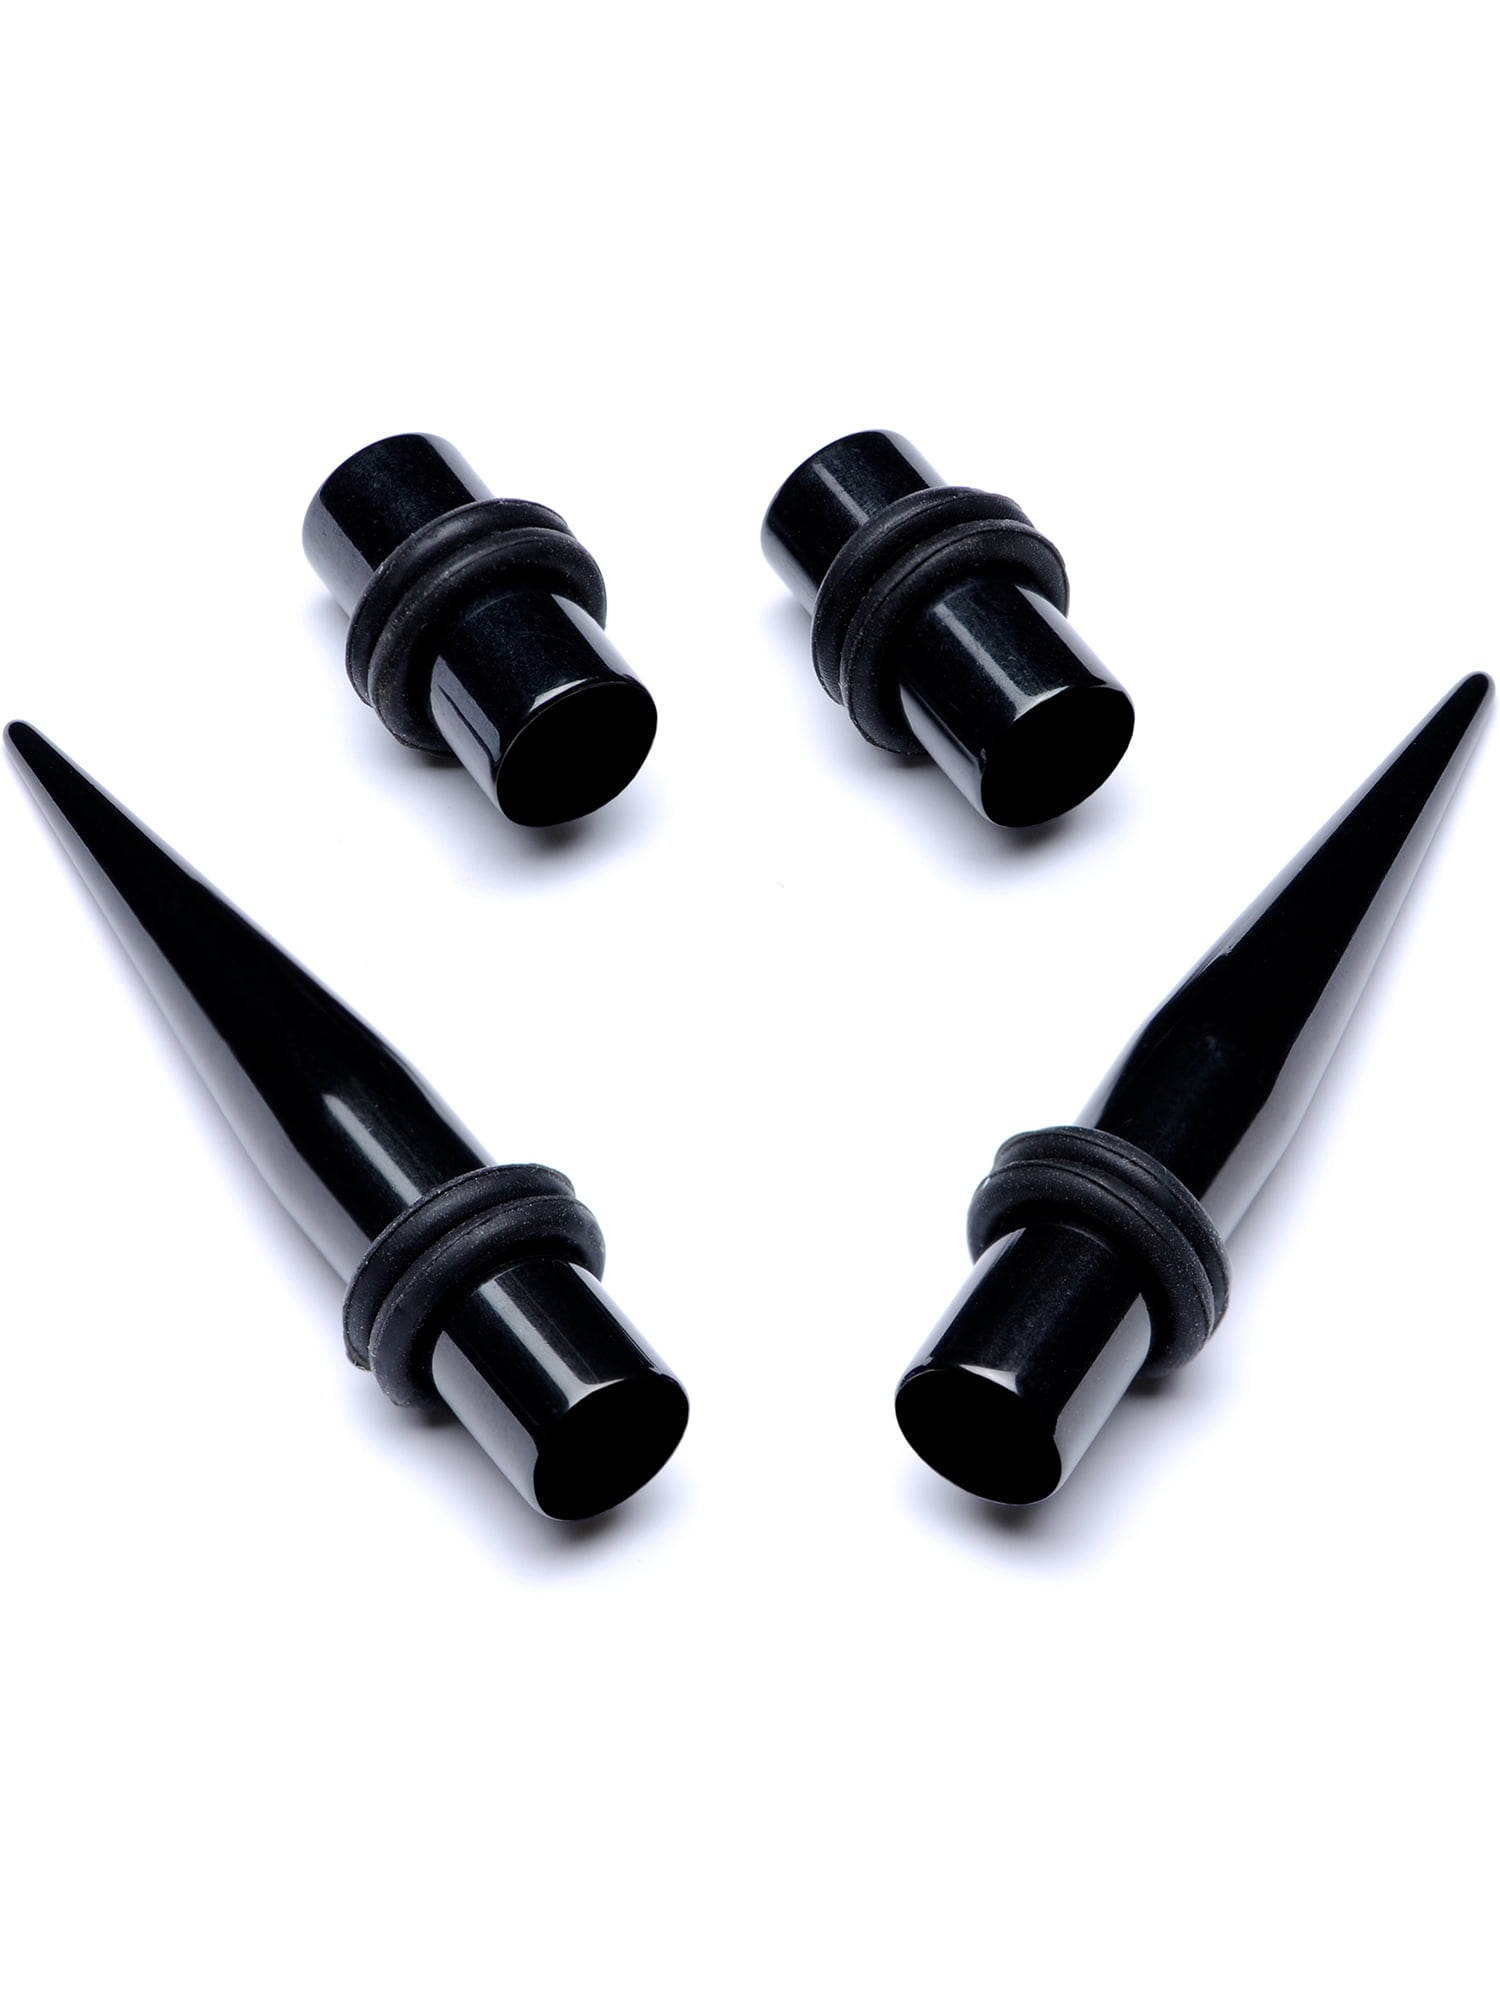 Pair of Black Taper Ear Plug Sawblade 'O' Rings 9 Sizes 